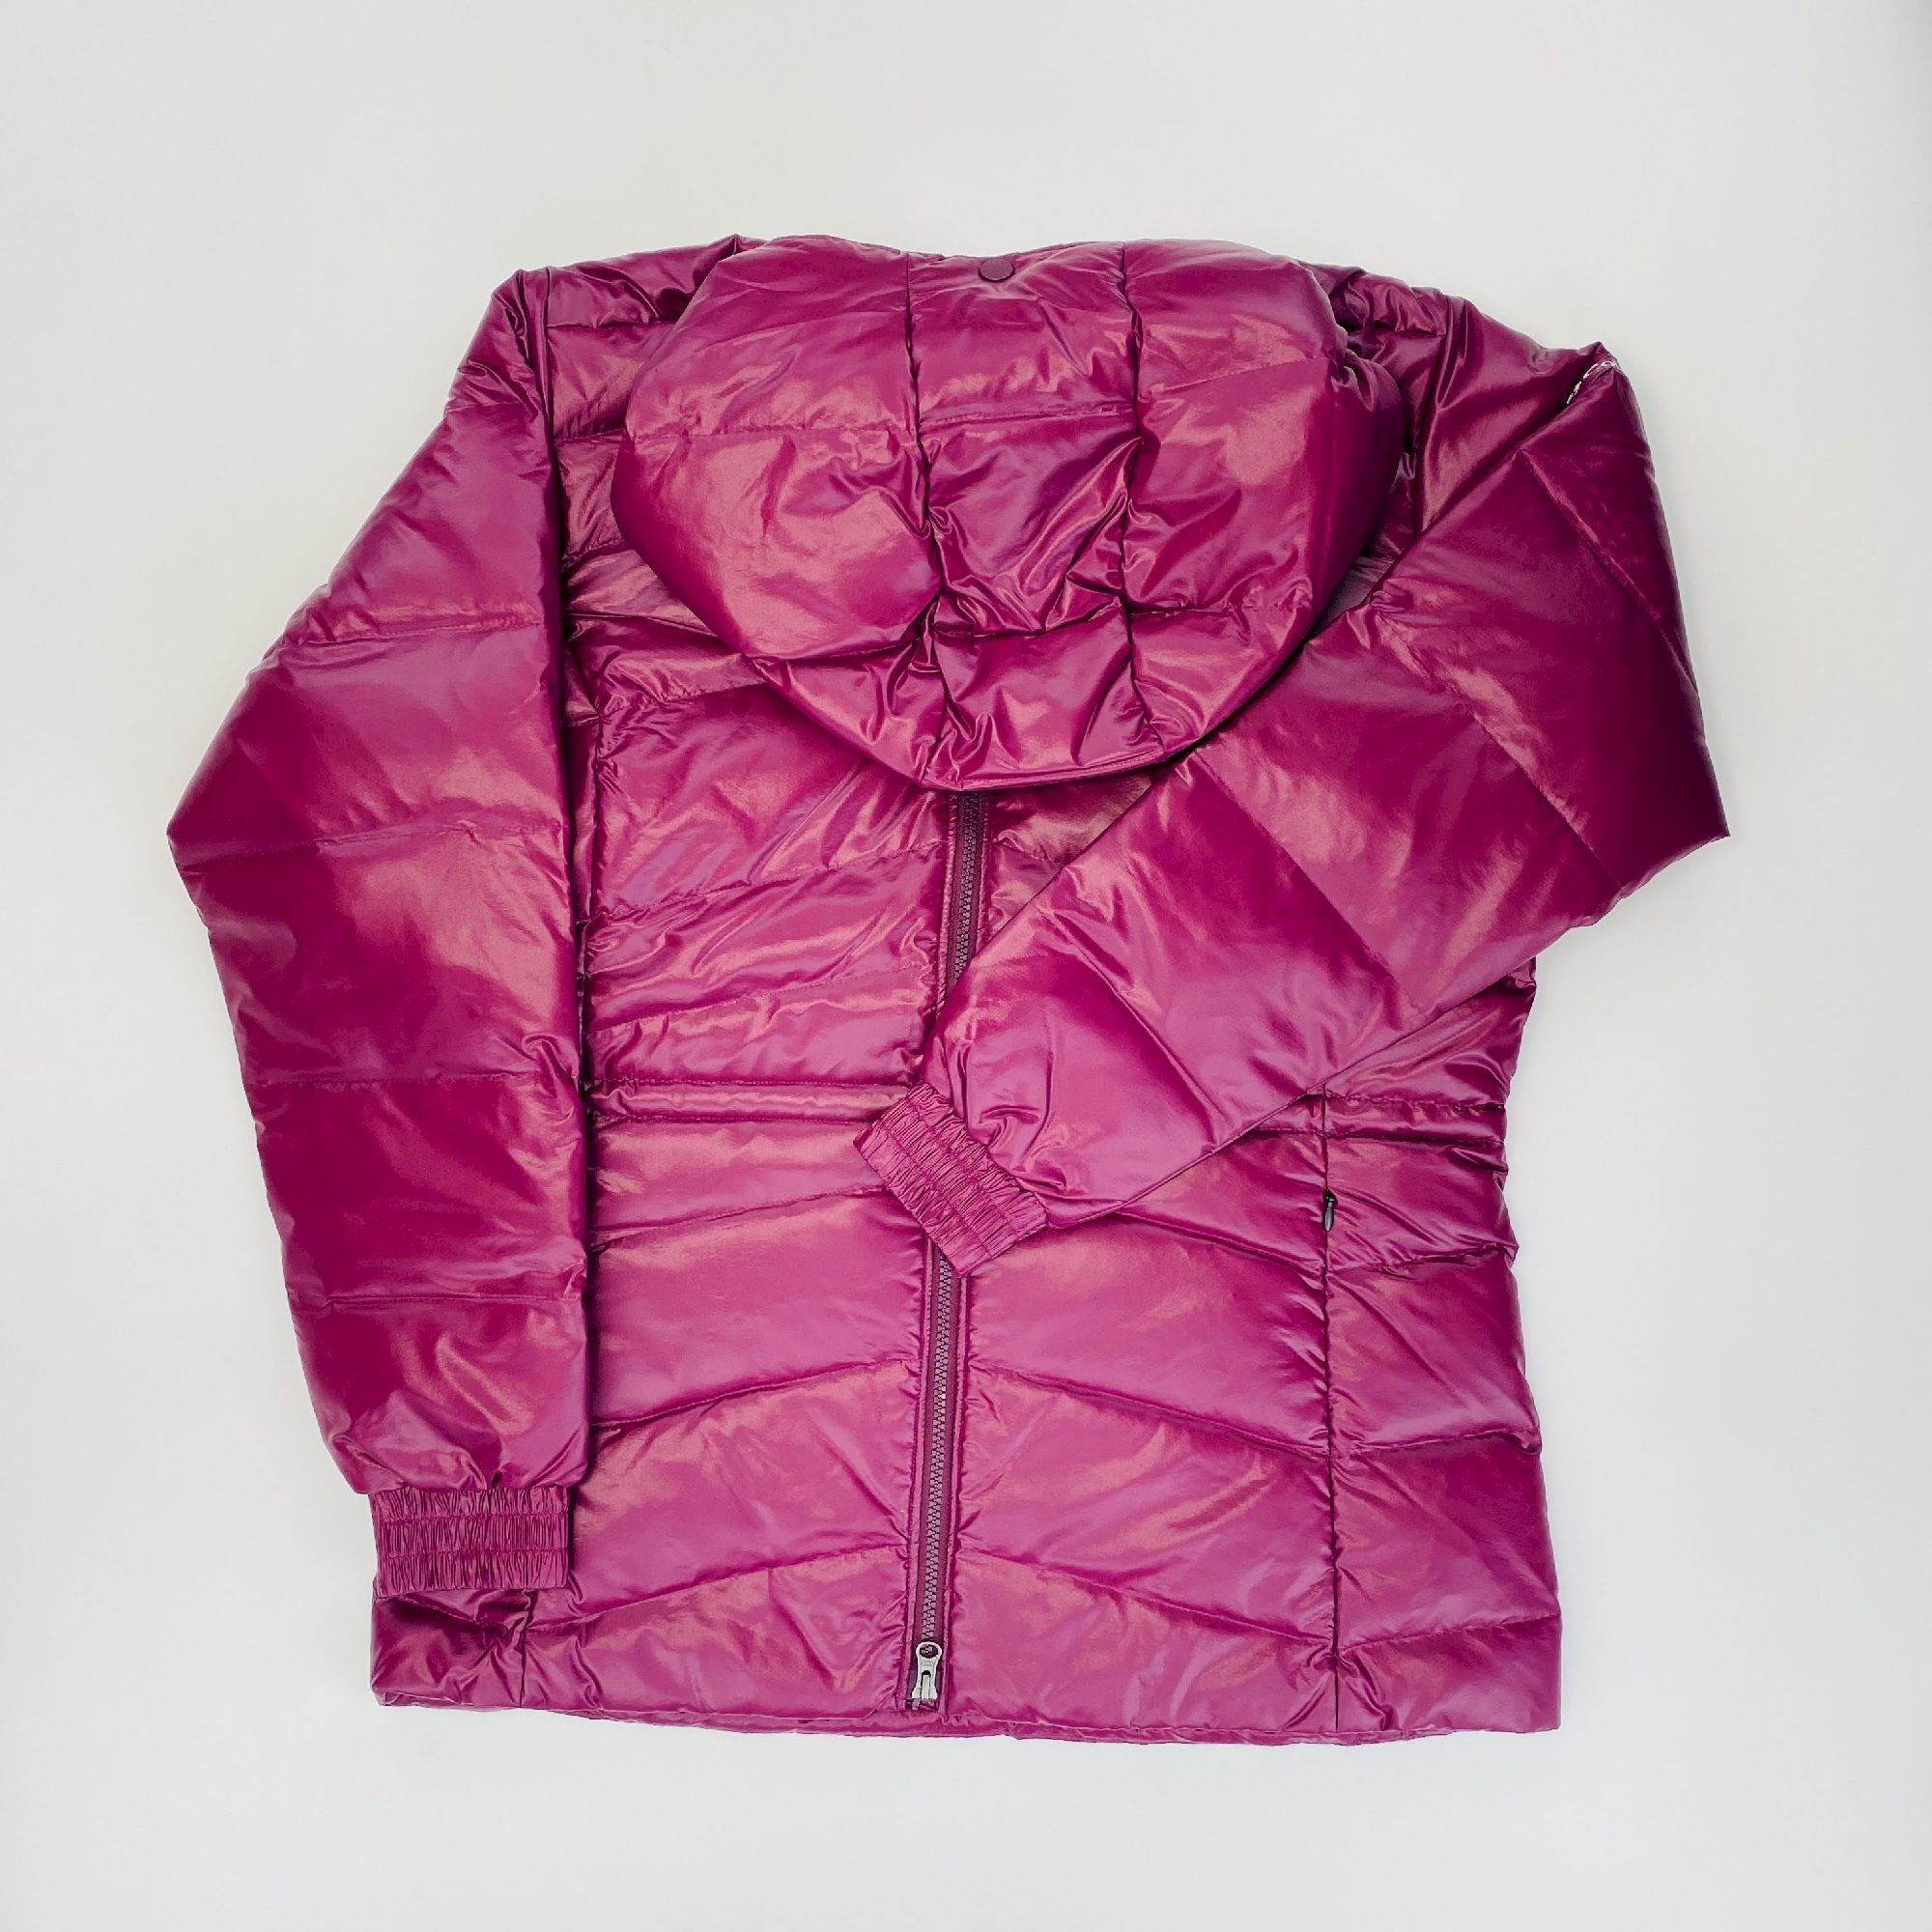 Columbia Icy Heights™ II Down Jacket - Giacca sintetica di seconda mano - Donna - Rosa - M | Hardloop